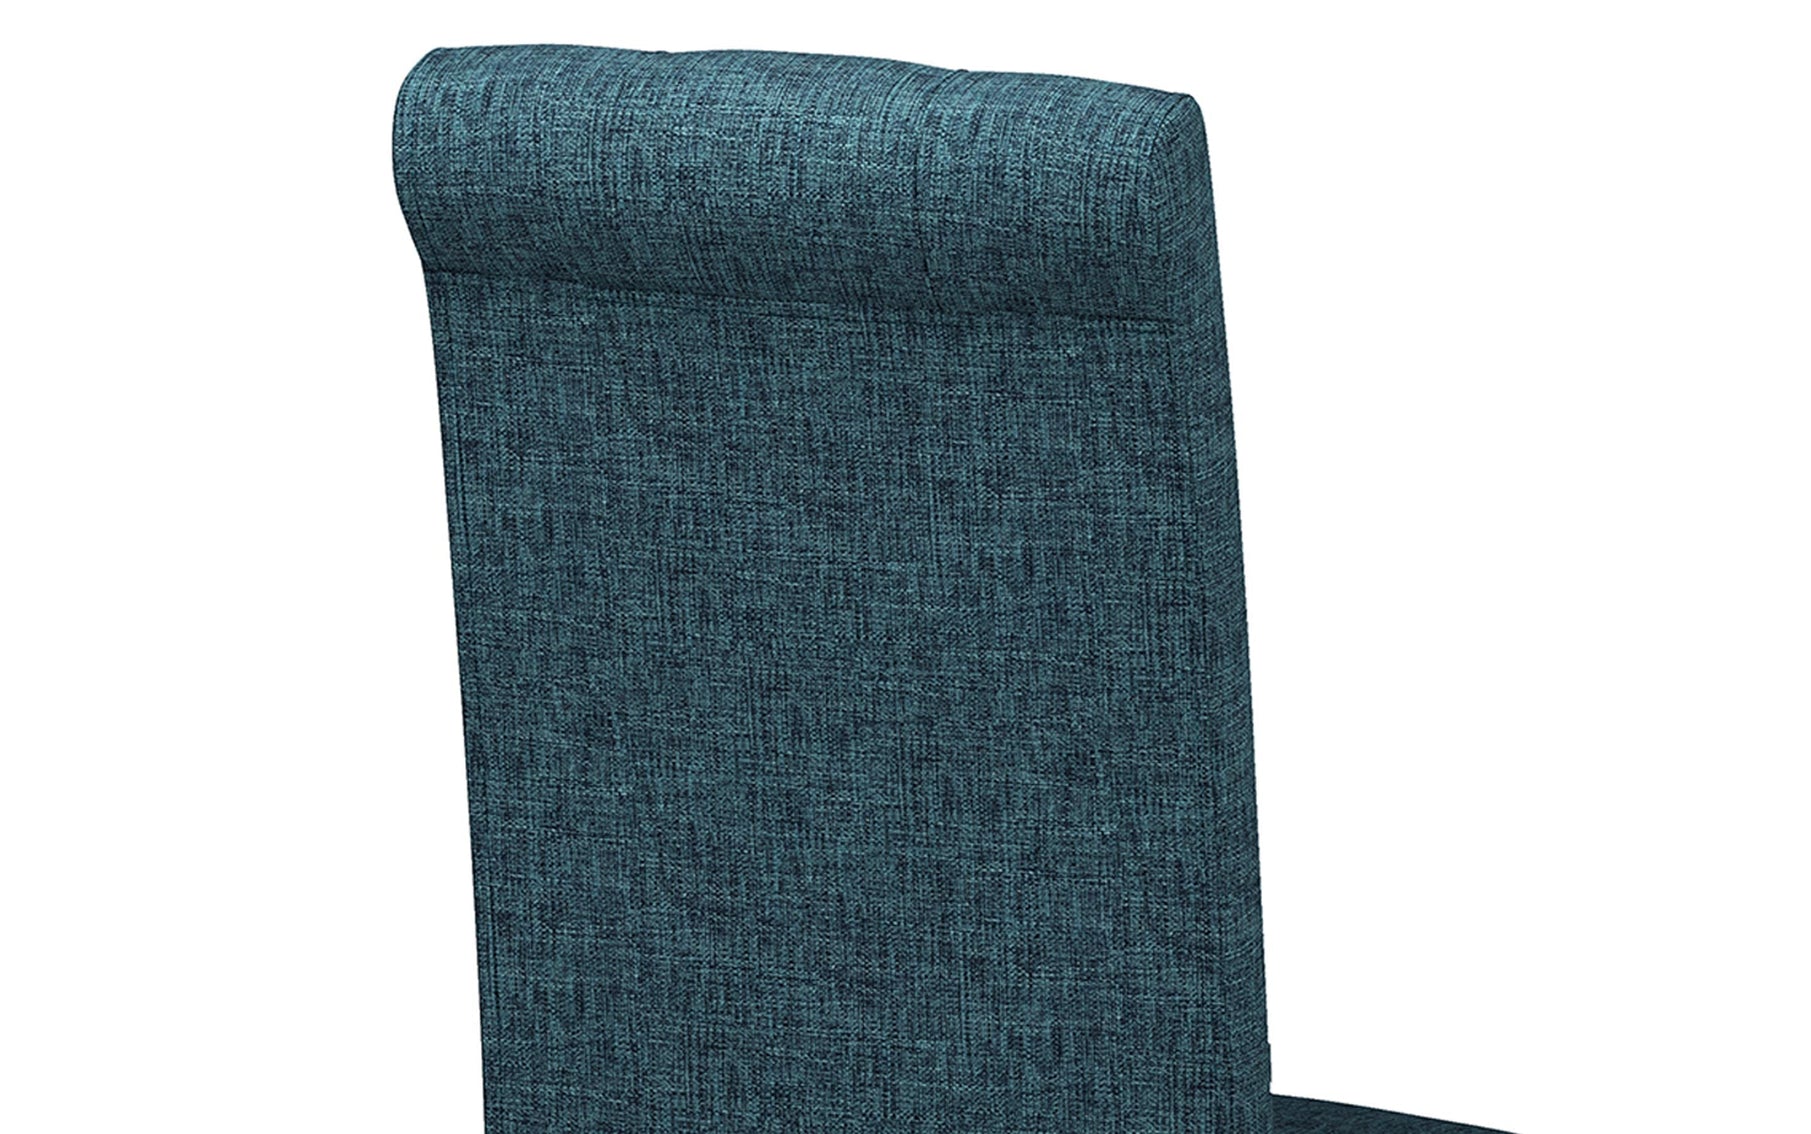 Denim Blue Linen Style Fabric | Cosmopolitan Large 9 piece Dining Set